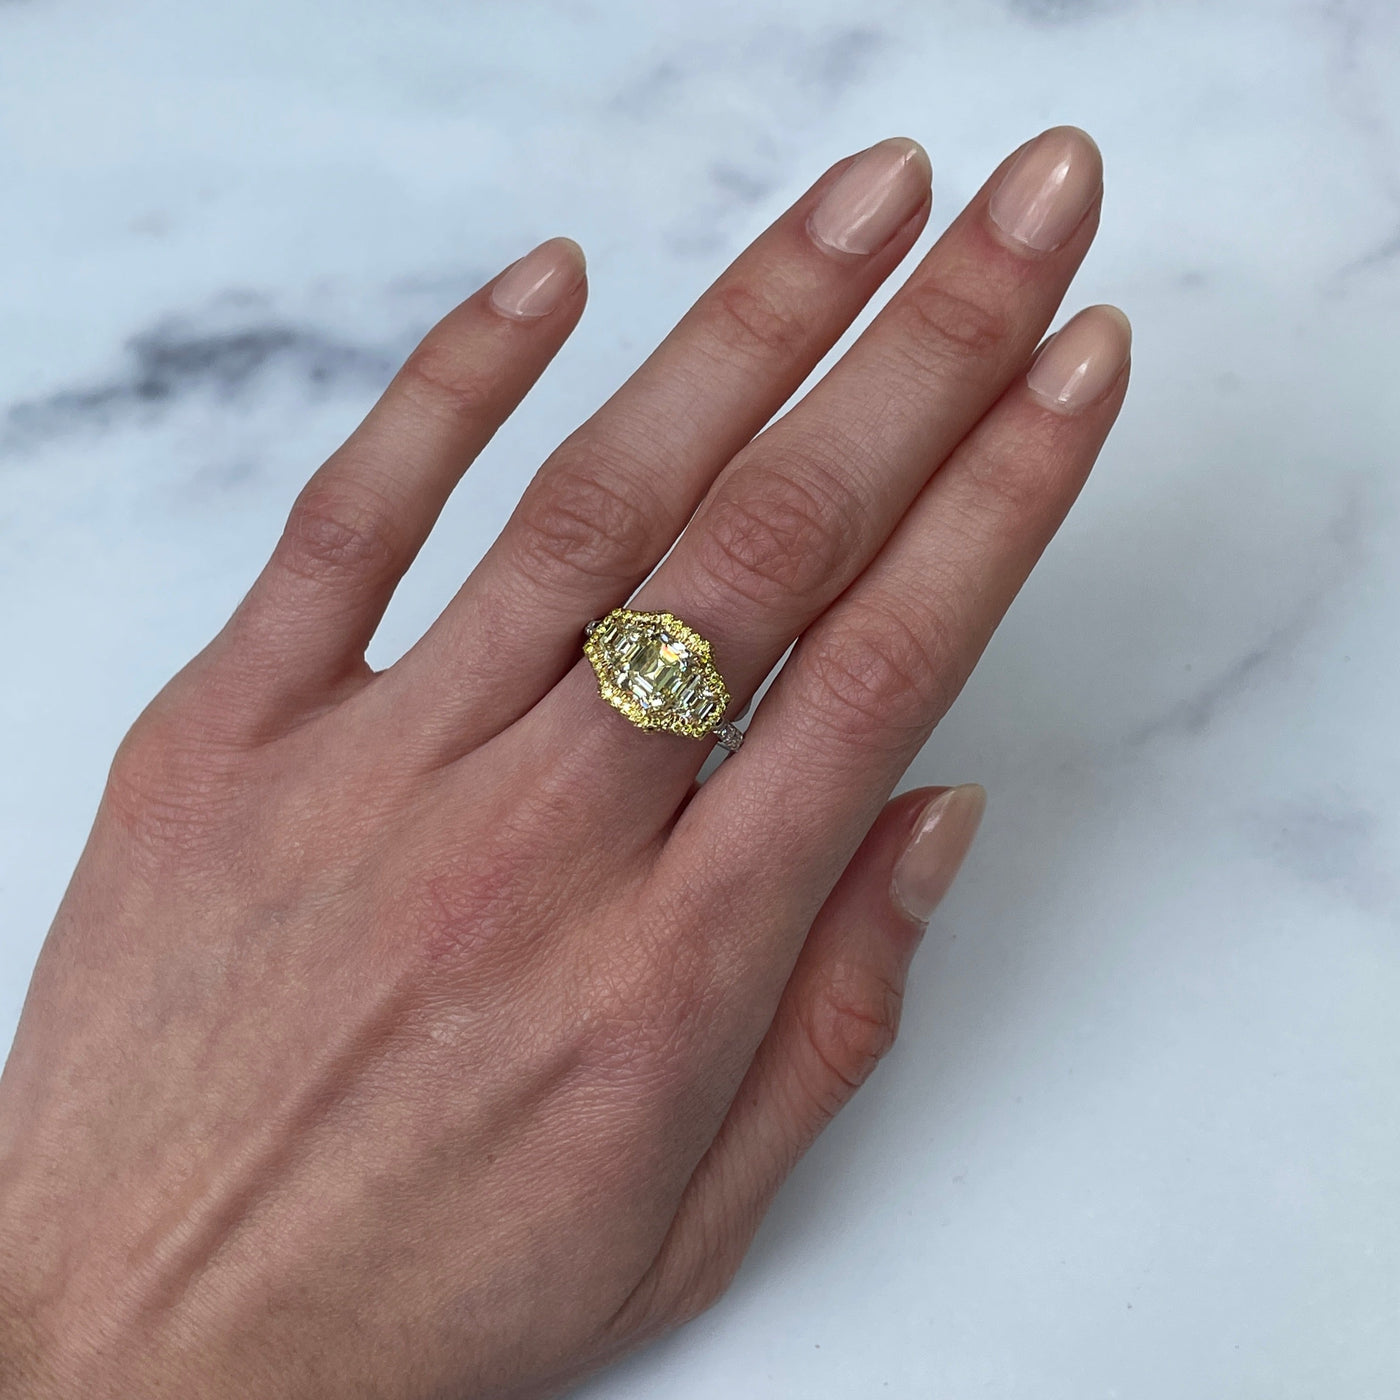 Platinum and Yellow Gold Yellow Emerald Cut Diamond Ring